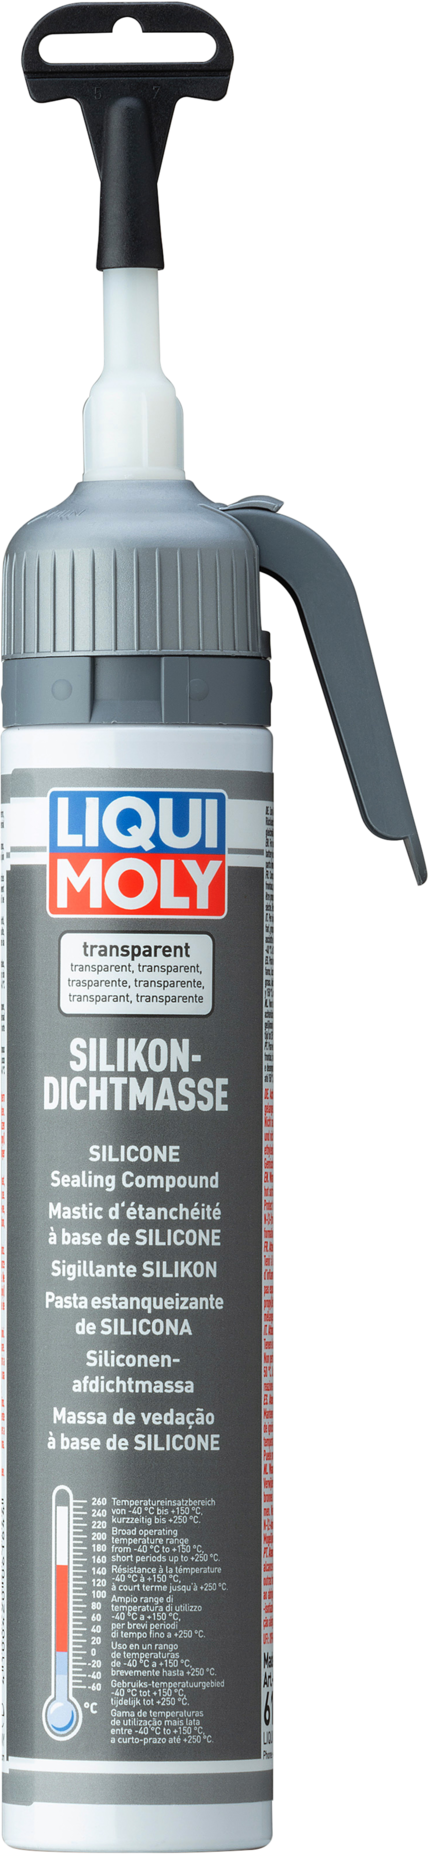 Liqui Moly Siliconen-afdichtmassa transparant, 200 ml